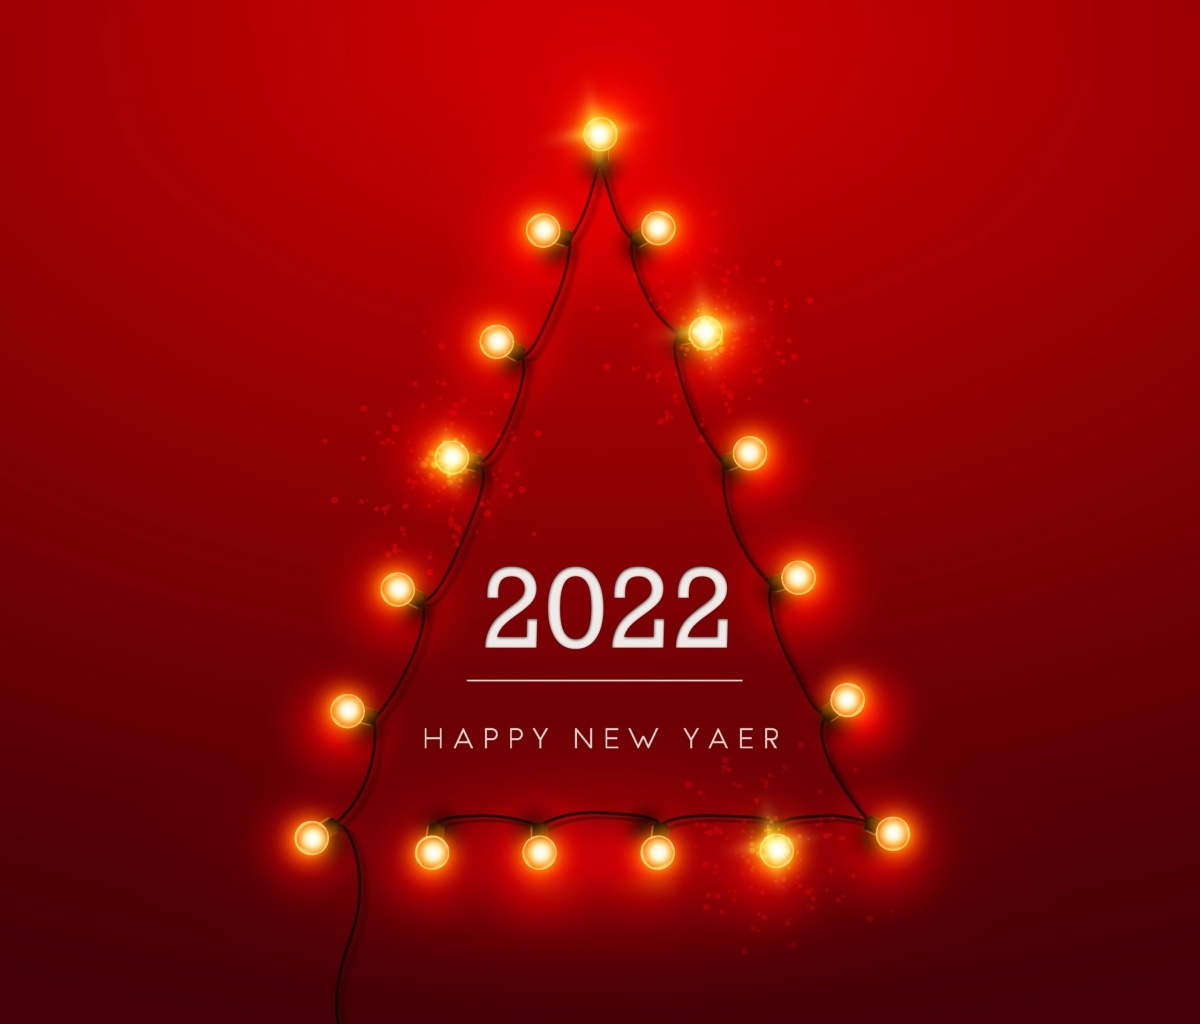 Happy New Year 2022 wallpaper 1200x1024